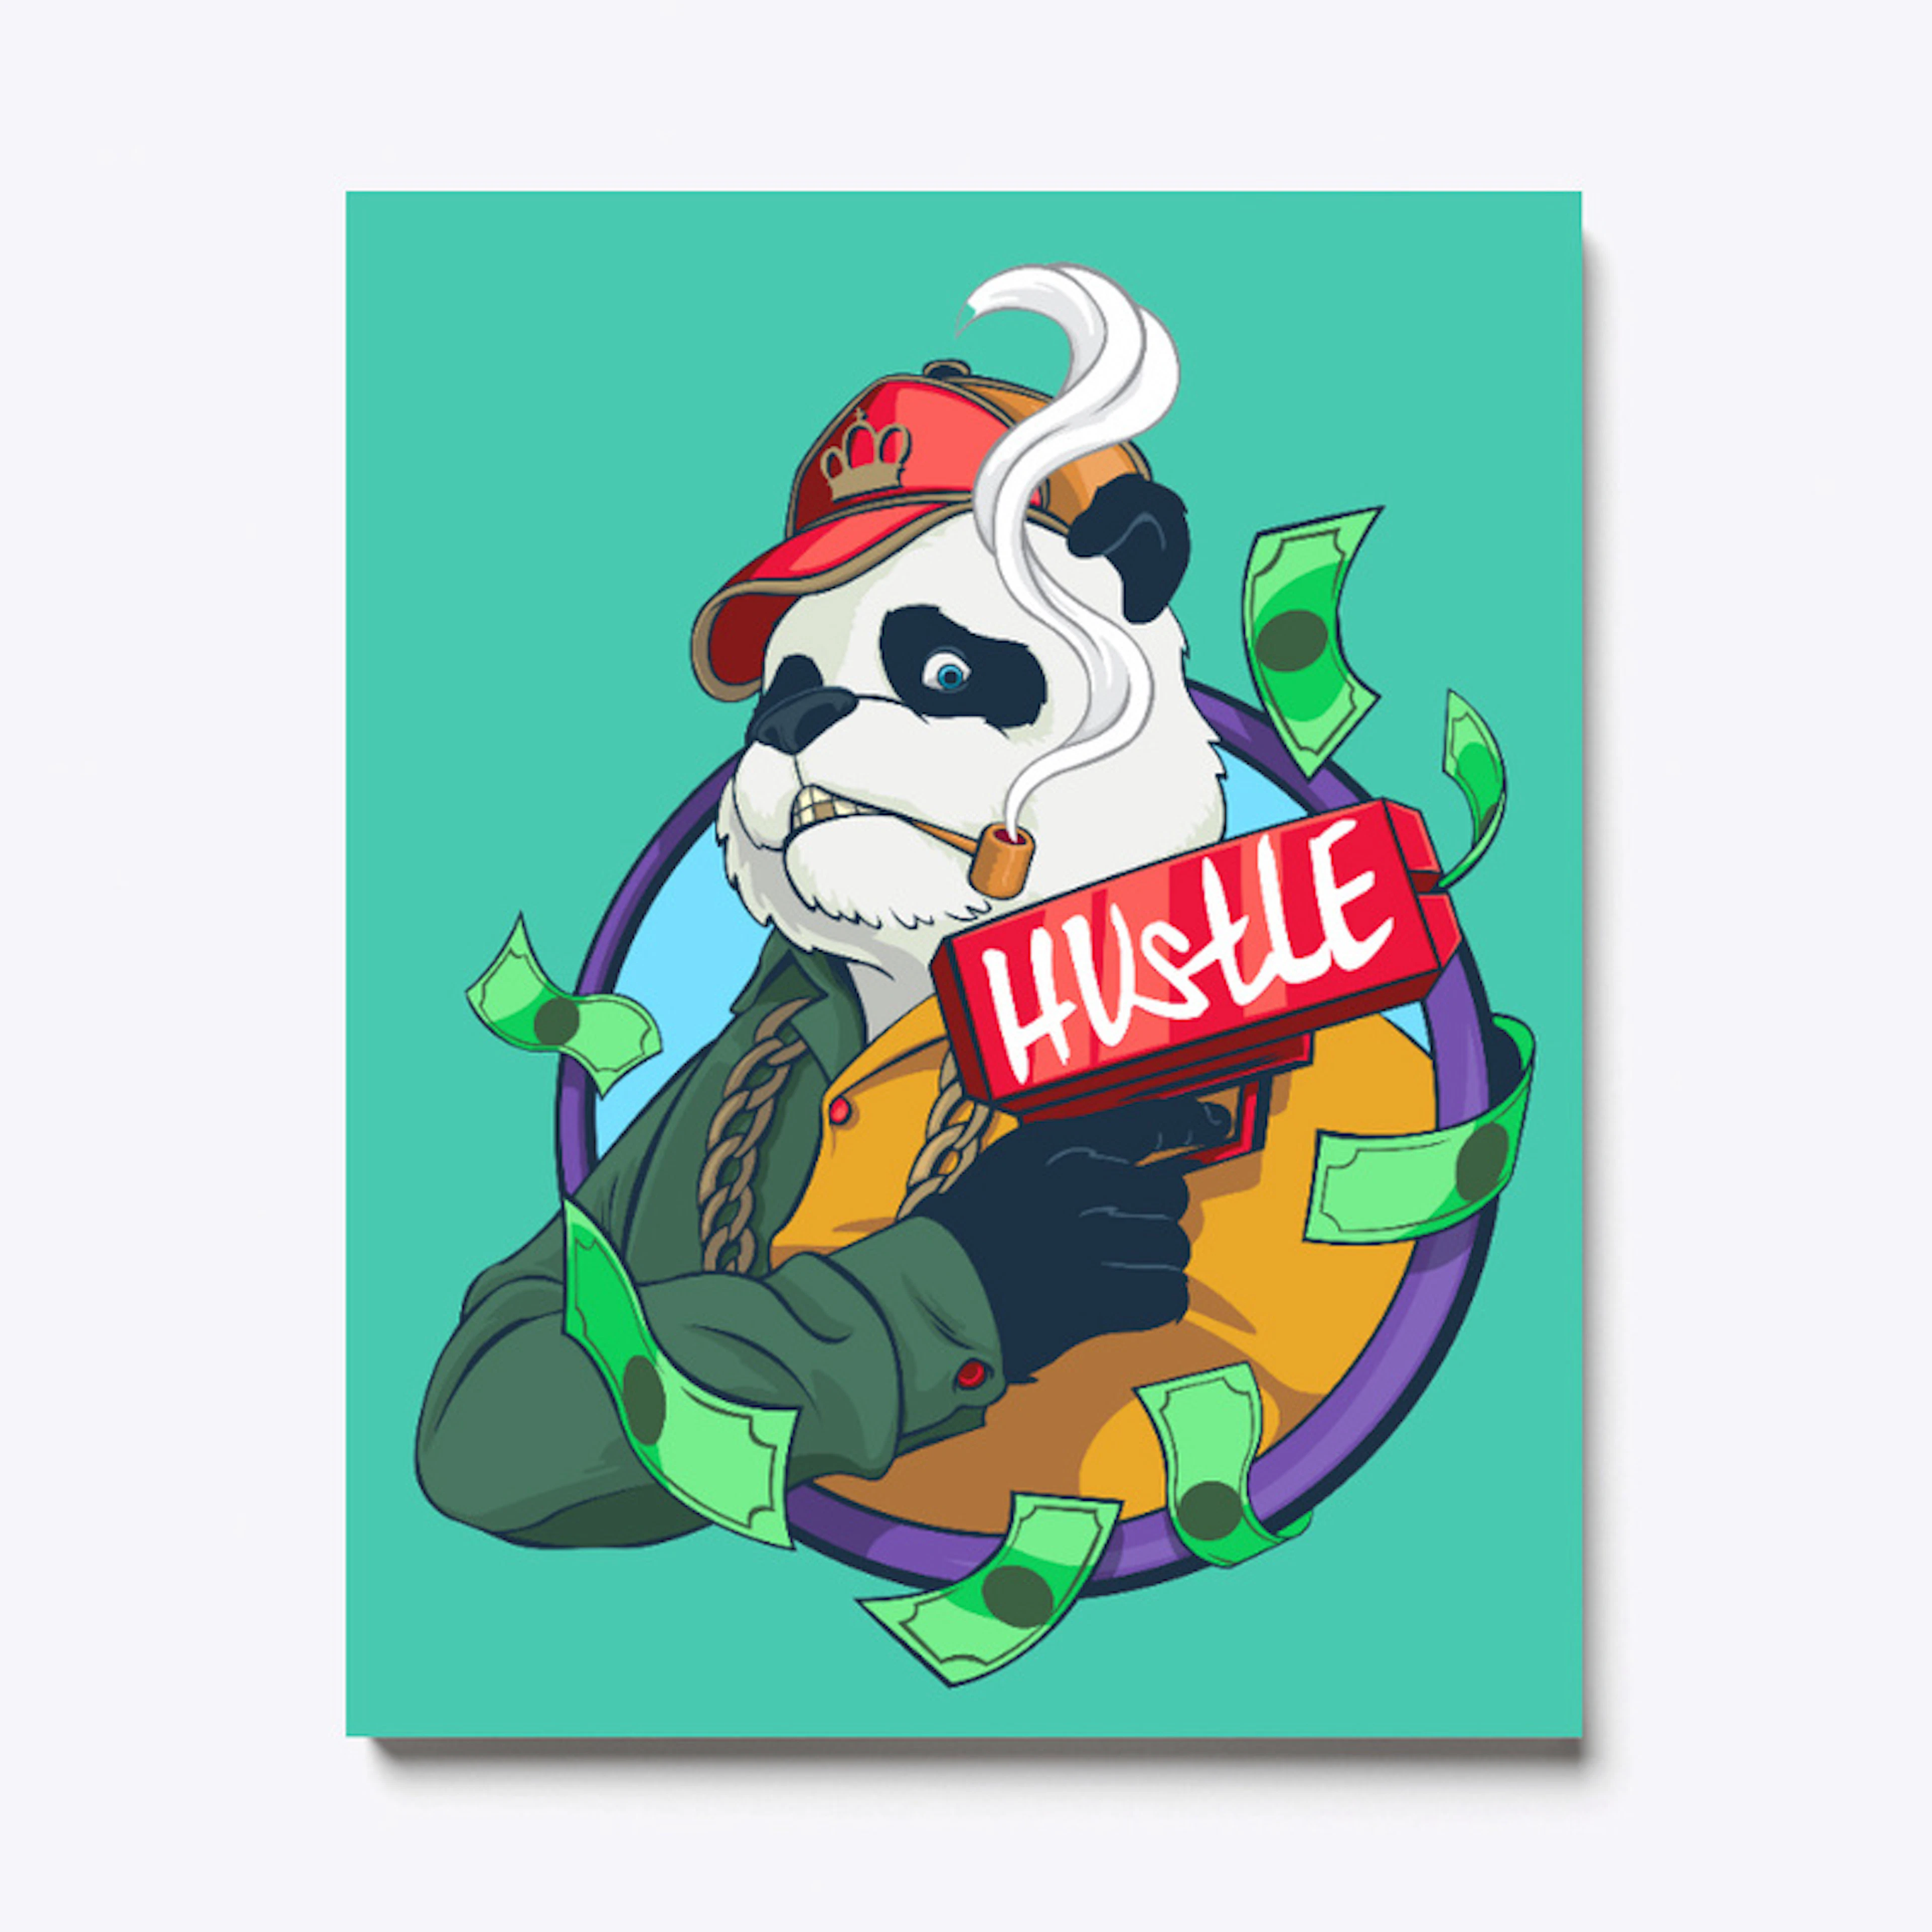 The Hustle Panda Rockin' a Cash Cannon!